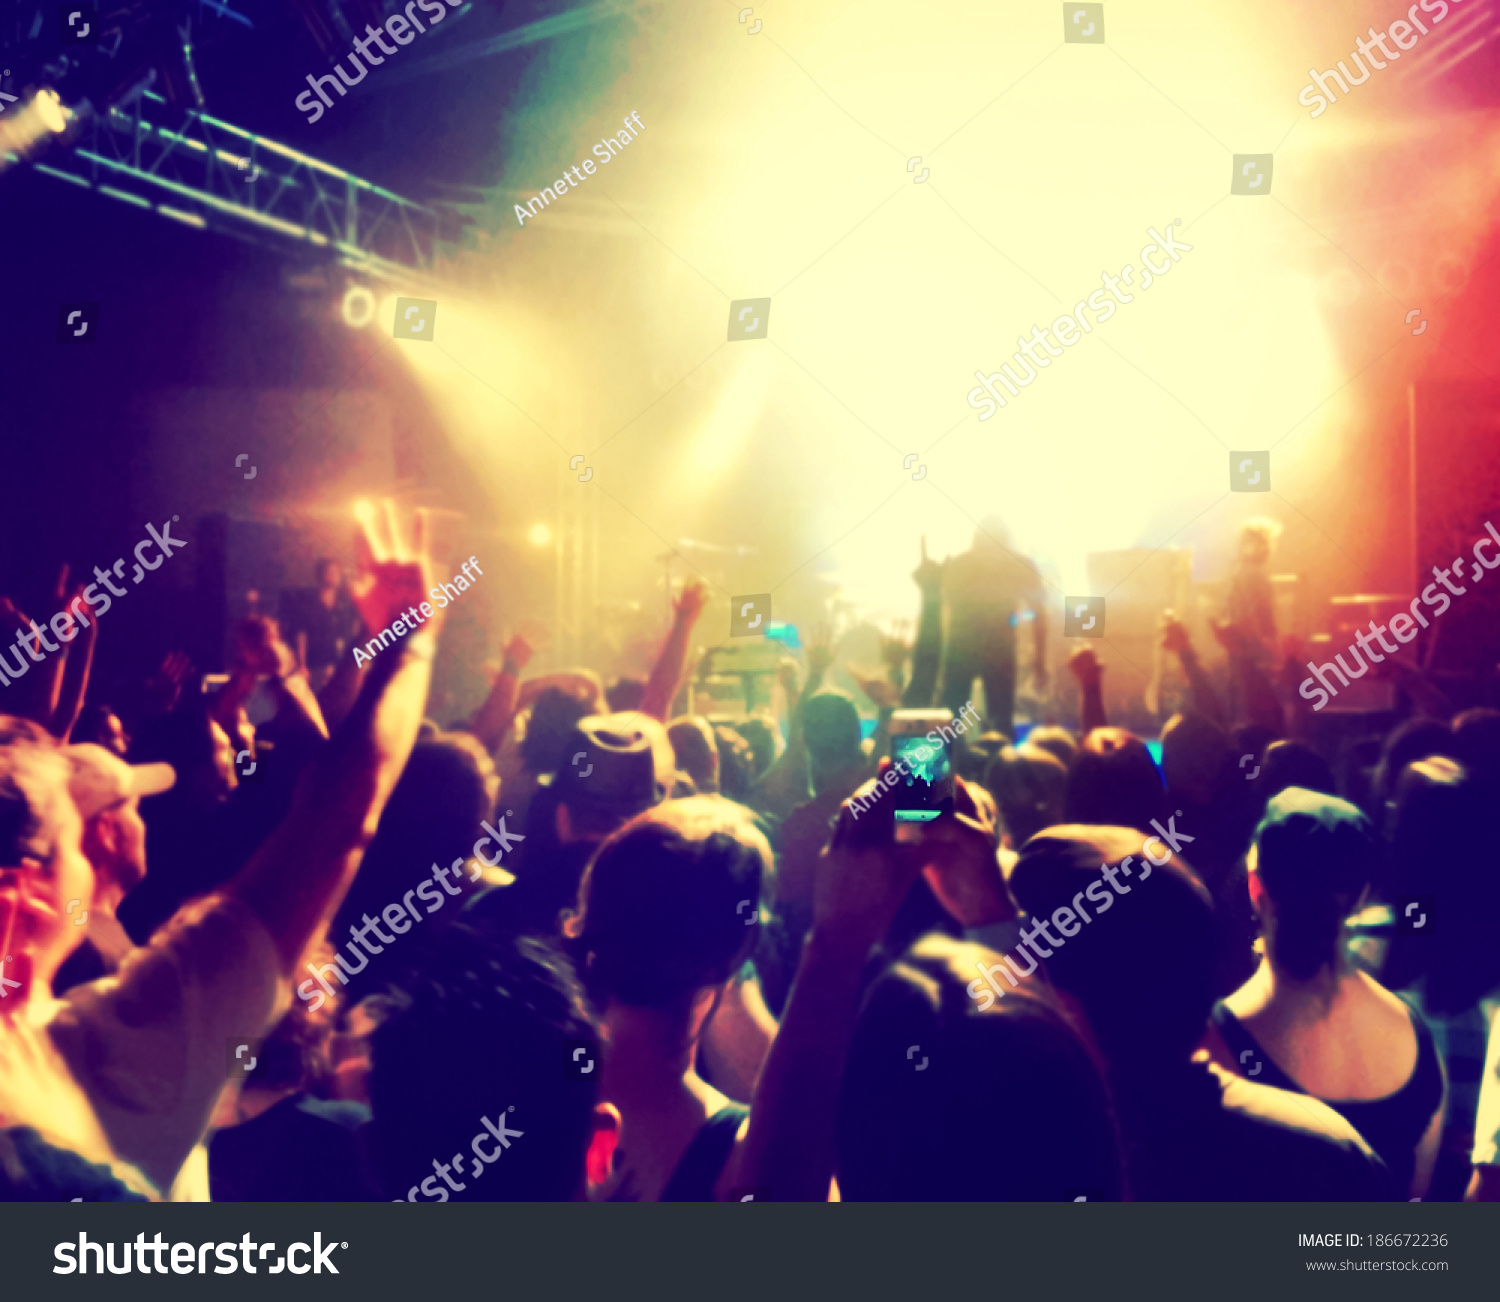 Crowd People Concert Stock Photo 186672236 - Shutterstock